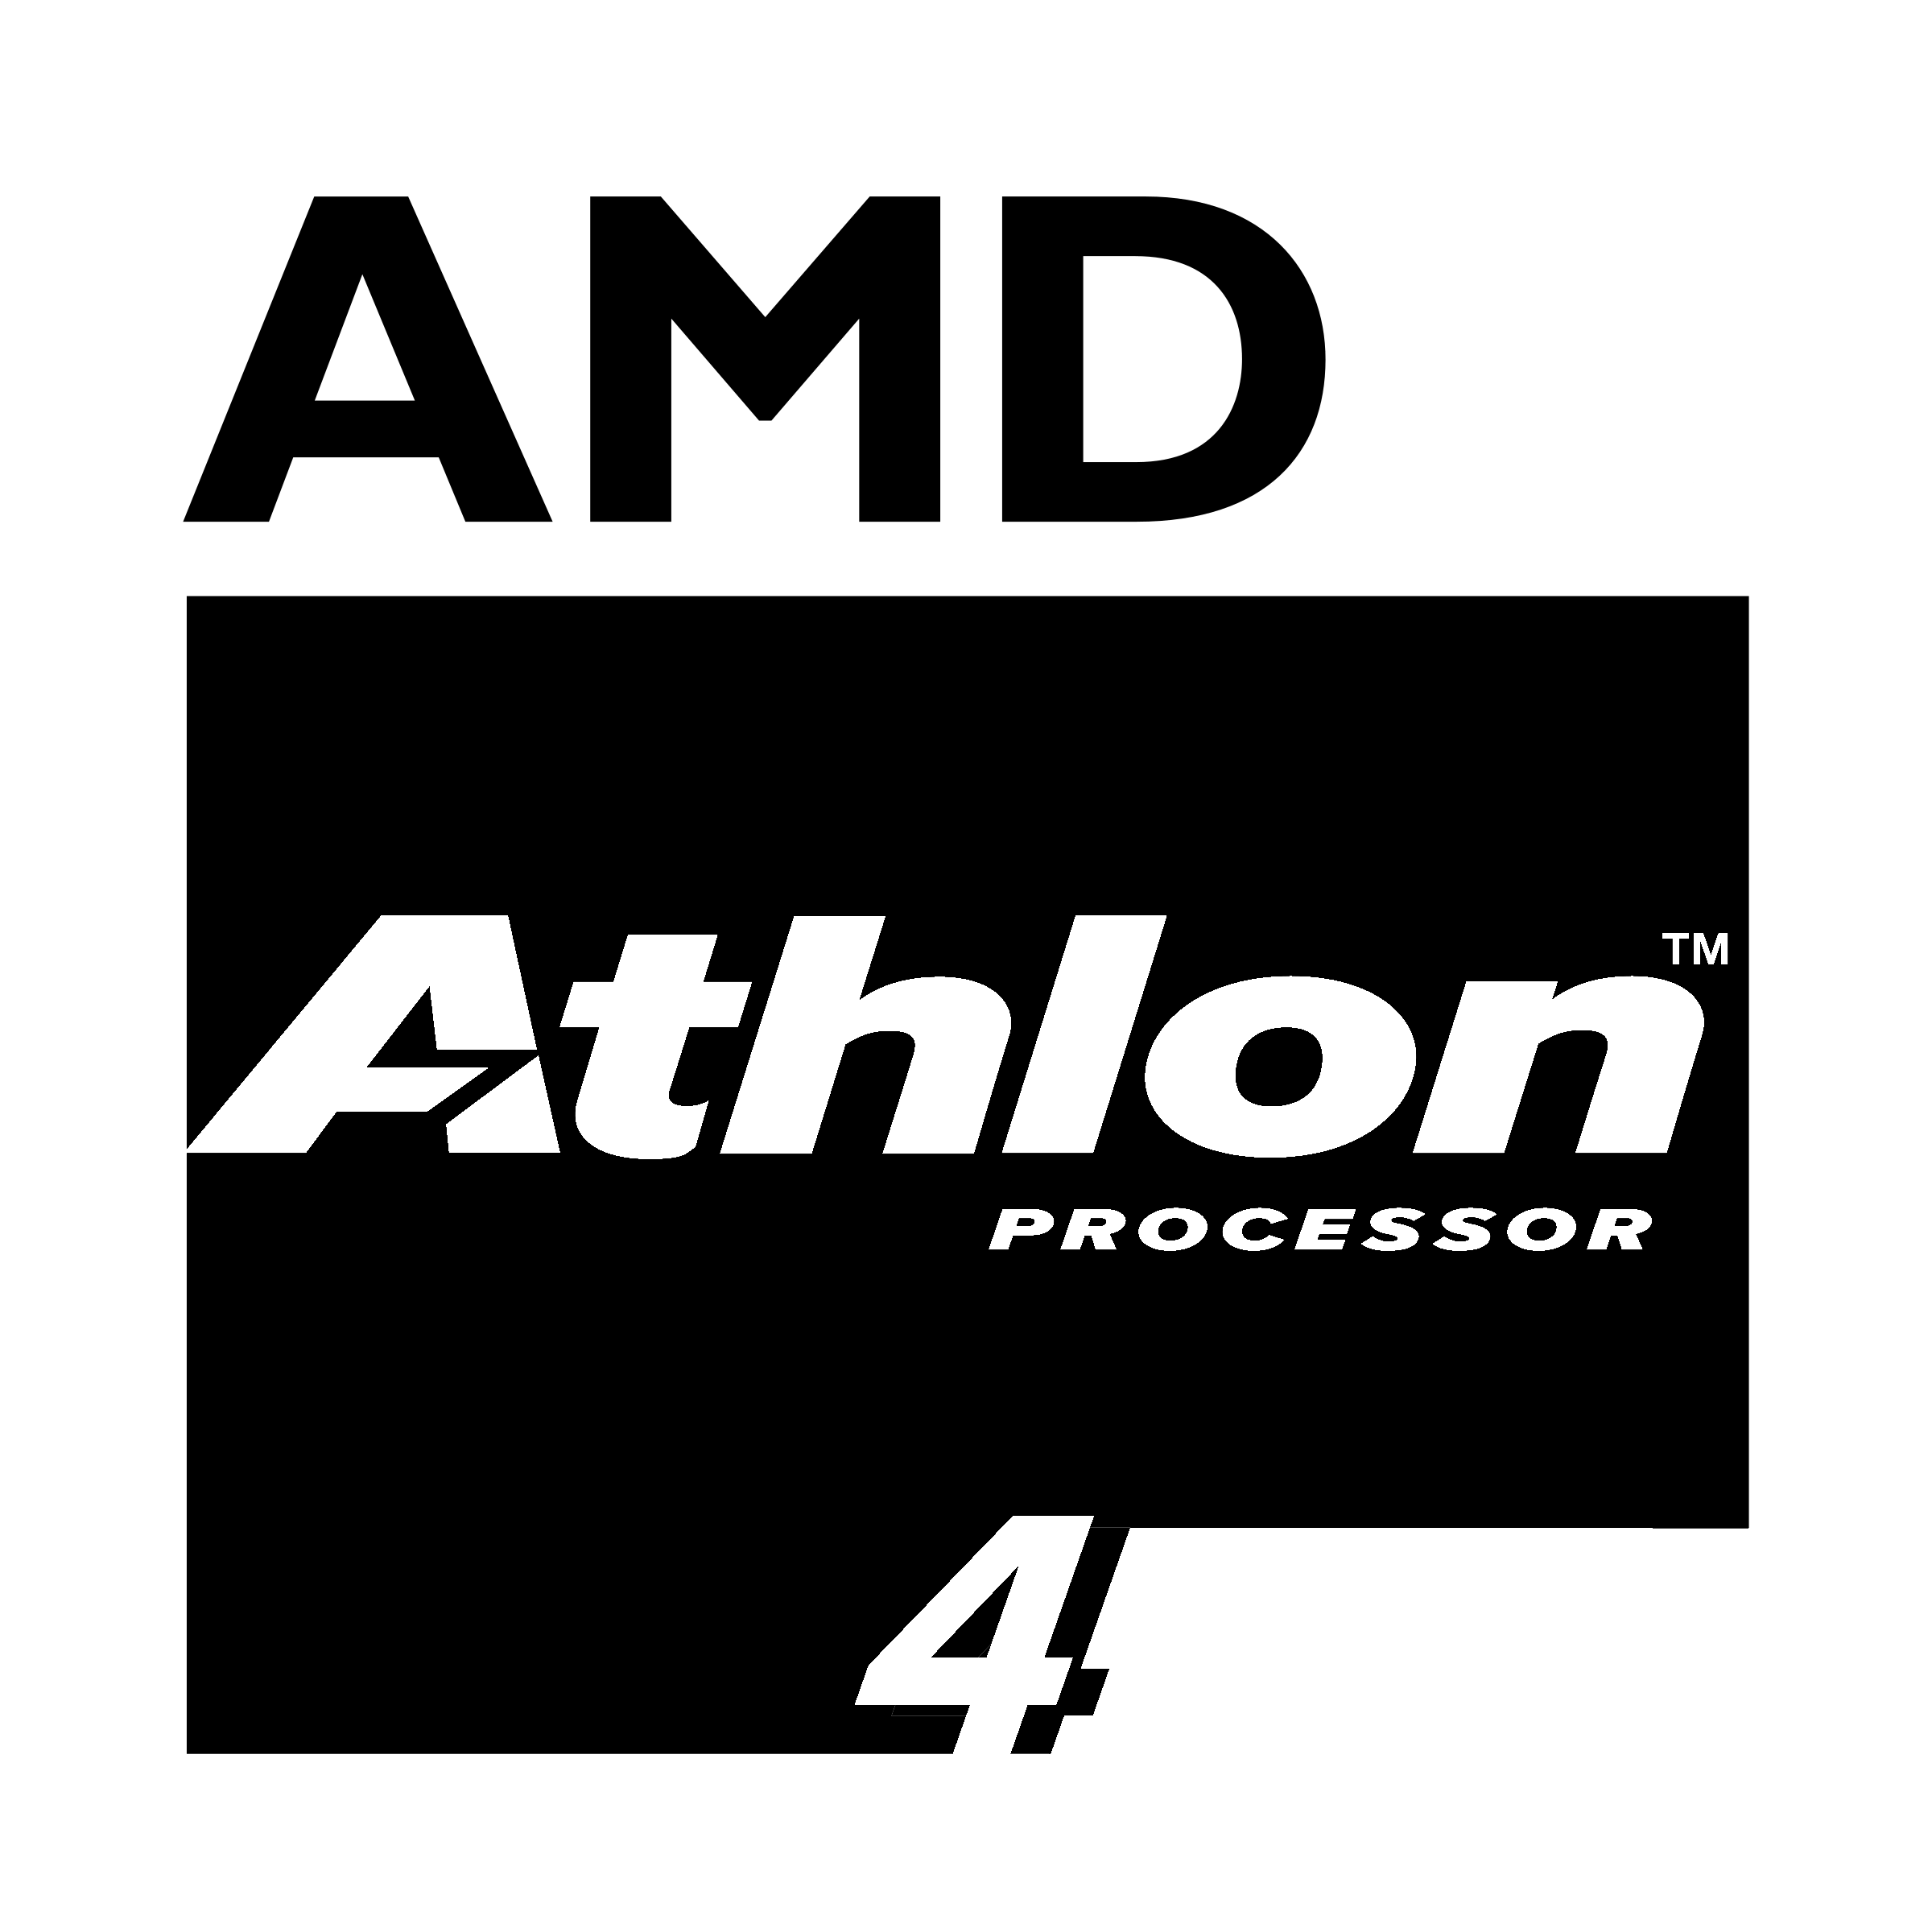 Processor Logo - AMD Athlon 4 Processor Logo PNG Transparent & SVG Vector